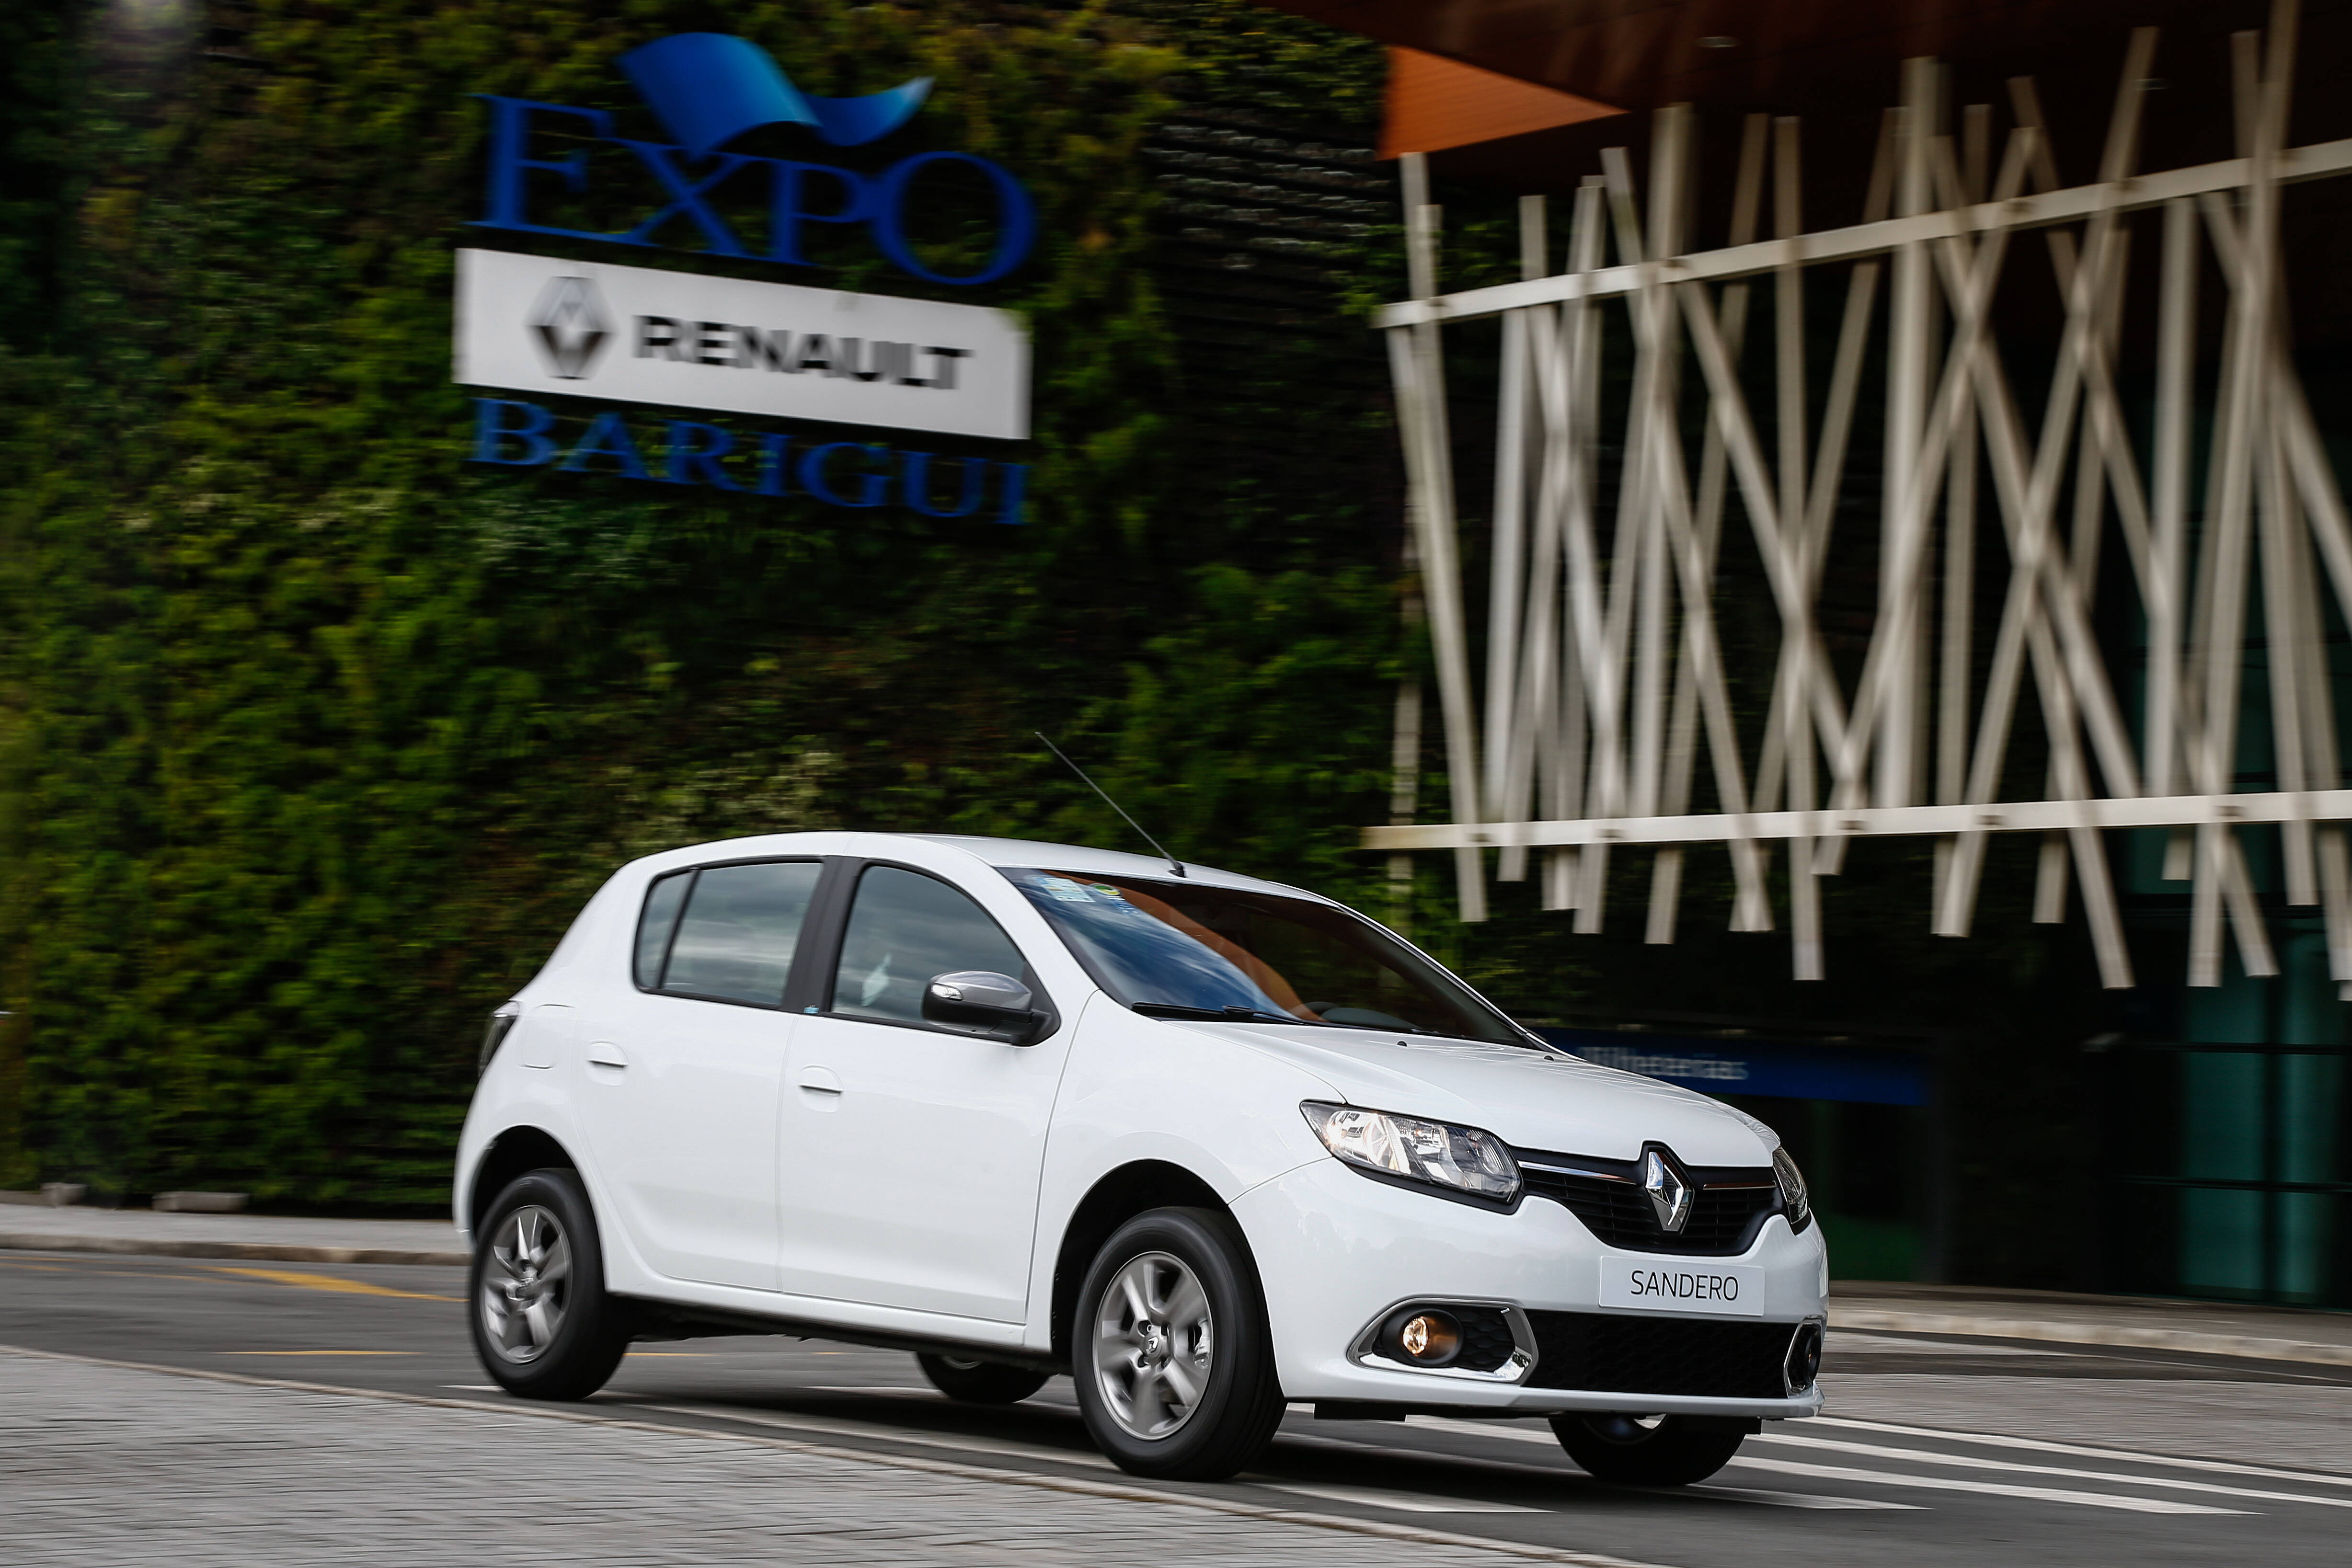 Renault Sandero 1.0. Foto: Divulgação